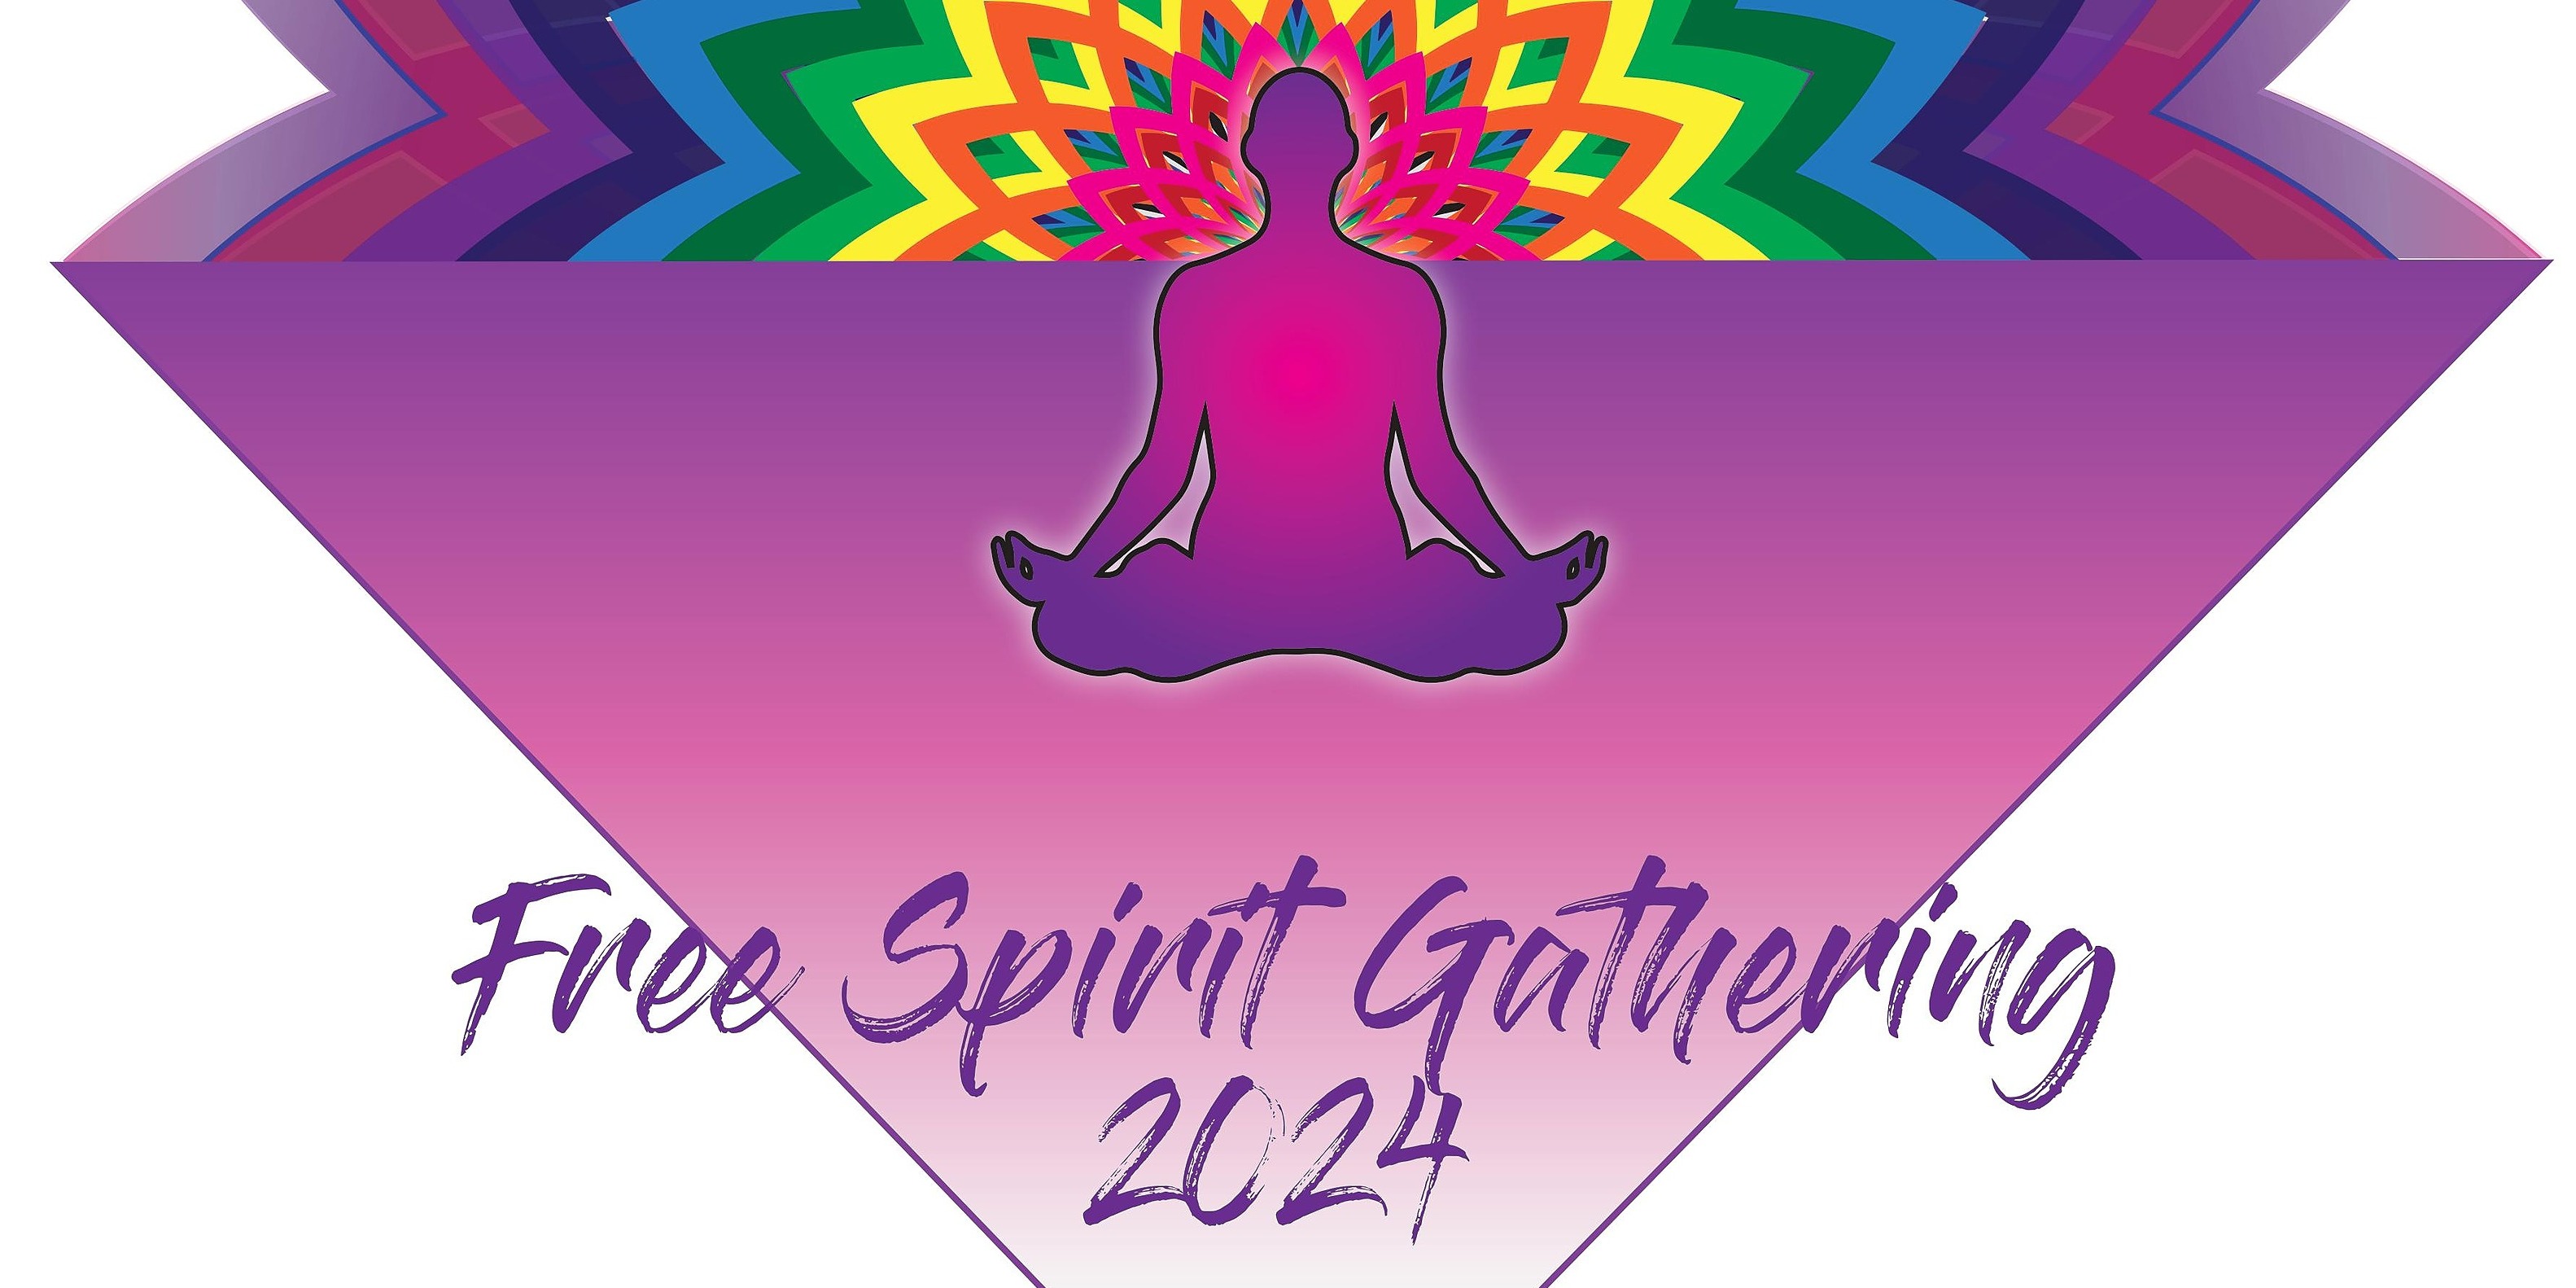 Free Spirit Gathering 2024, Darlington, Tue Aug 6th 2024, 900 am Sun